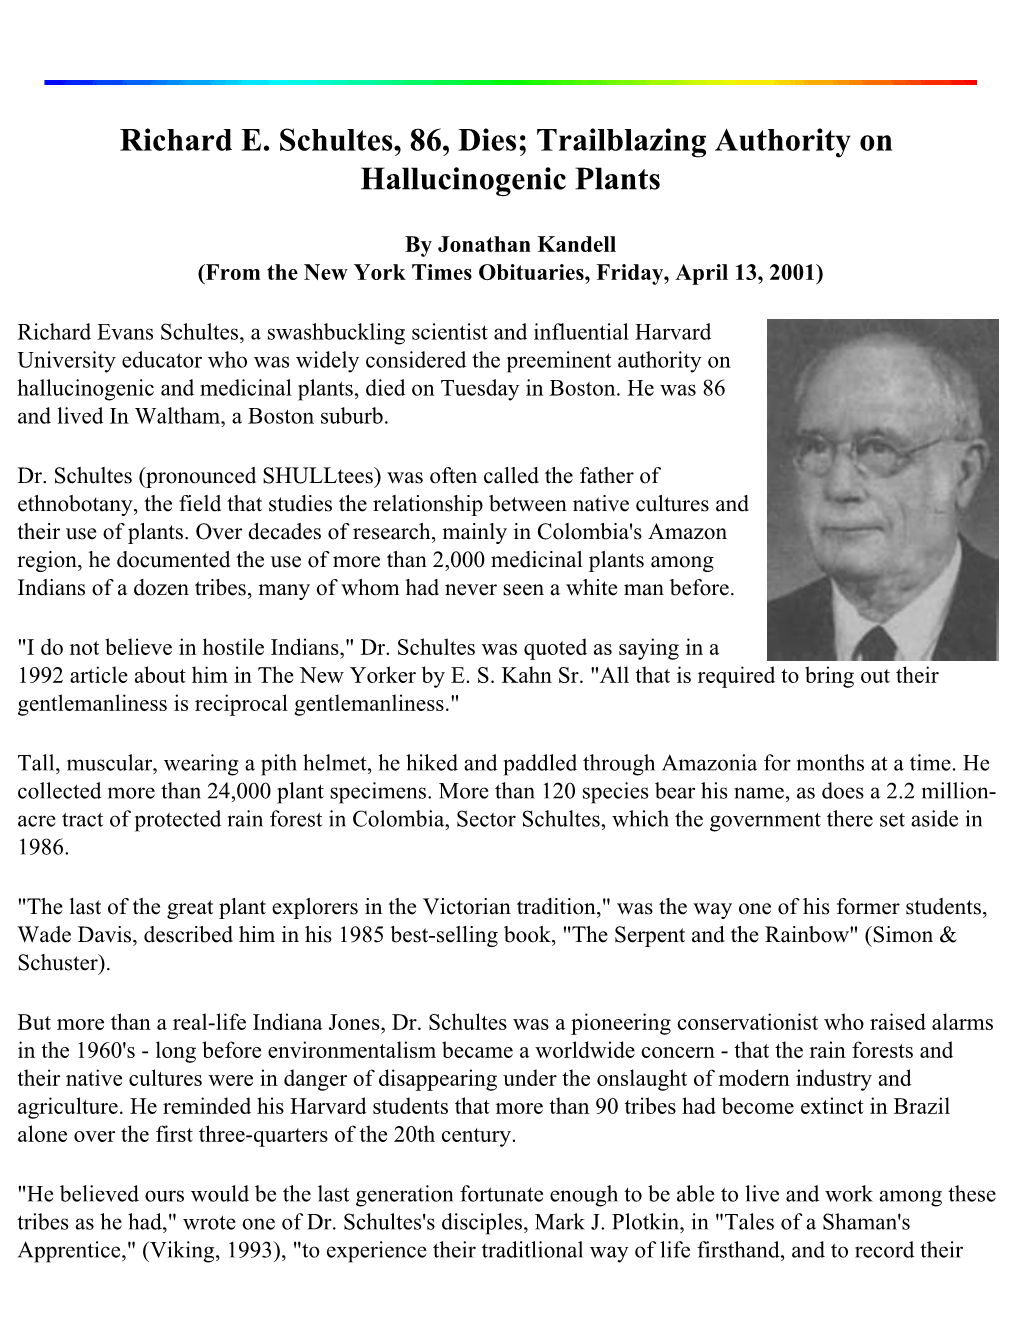 Richard E. Schultes, 86, Dies; Trailblazing Authority on Hallucinogenic Plants